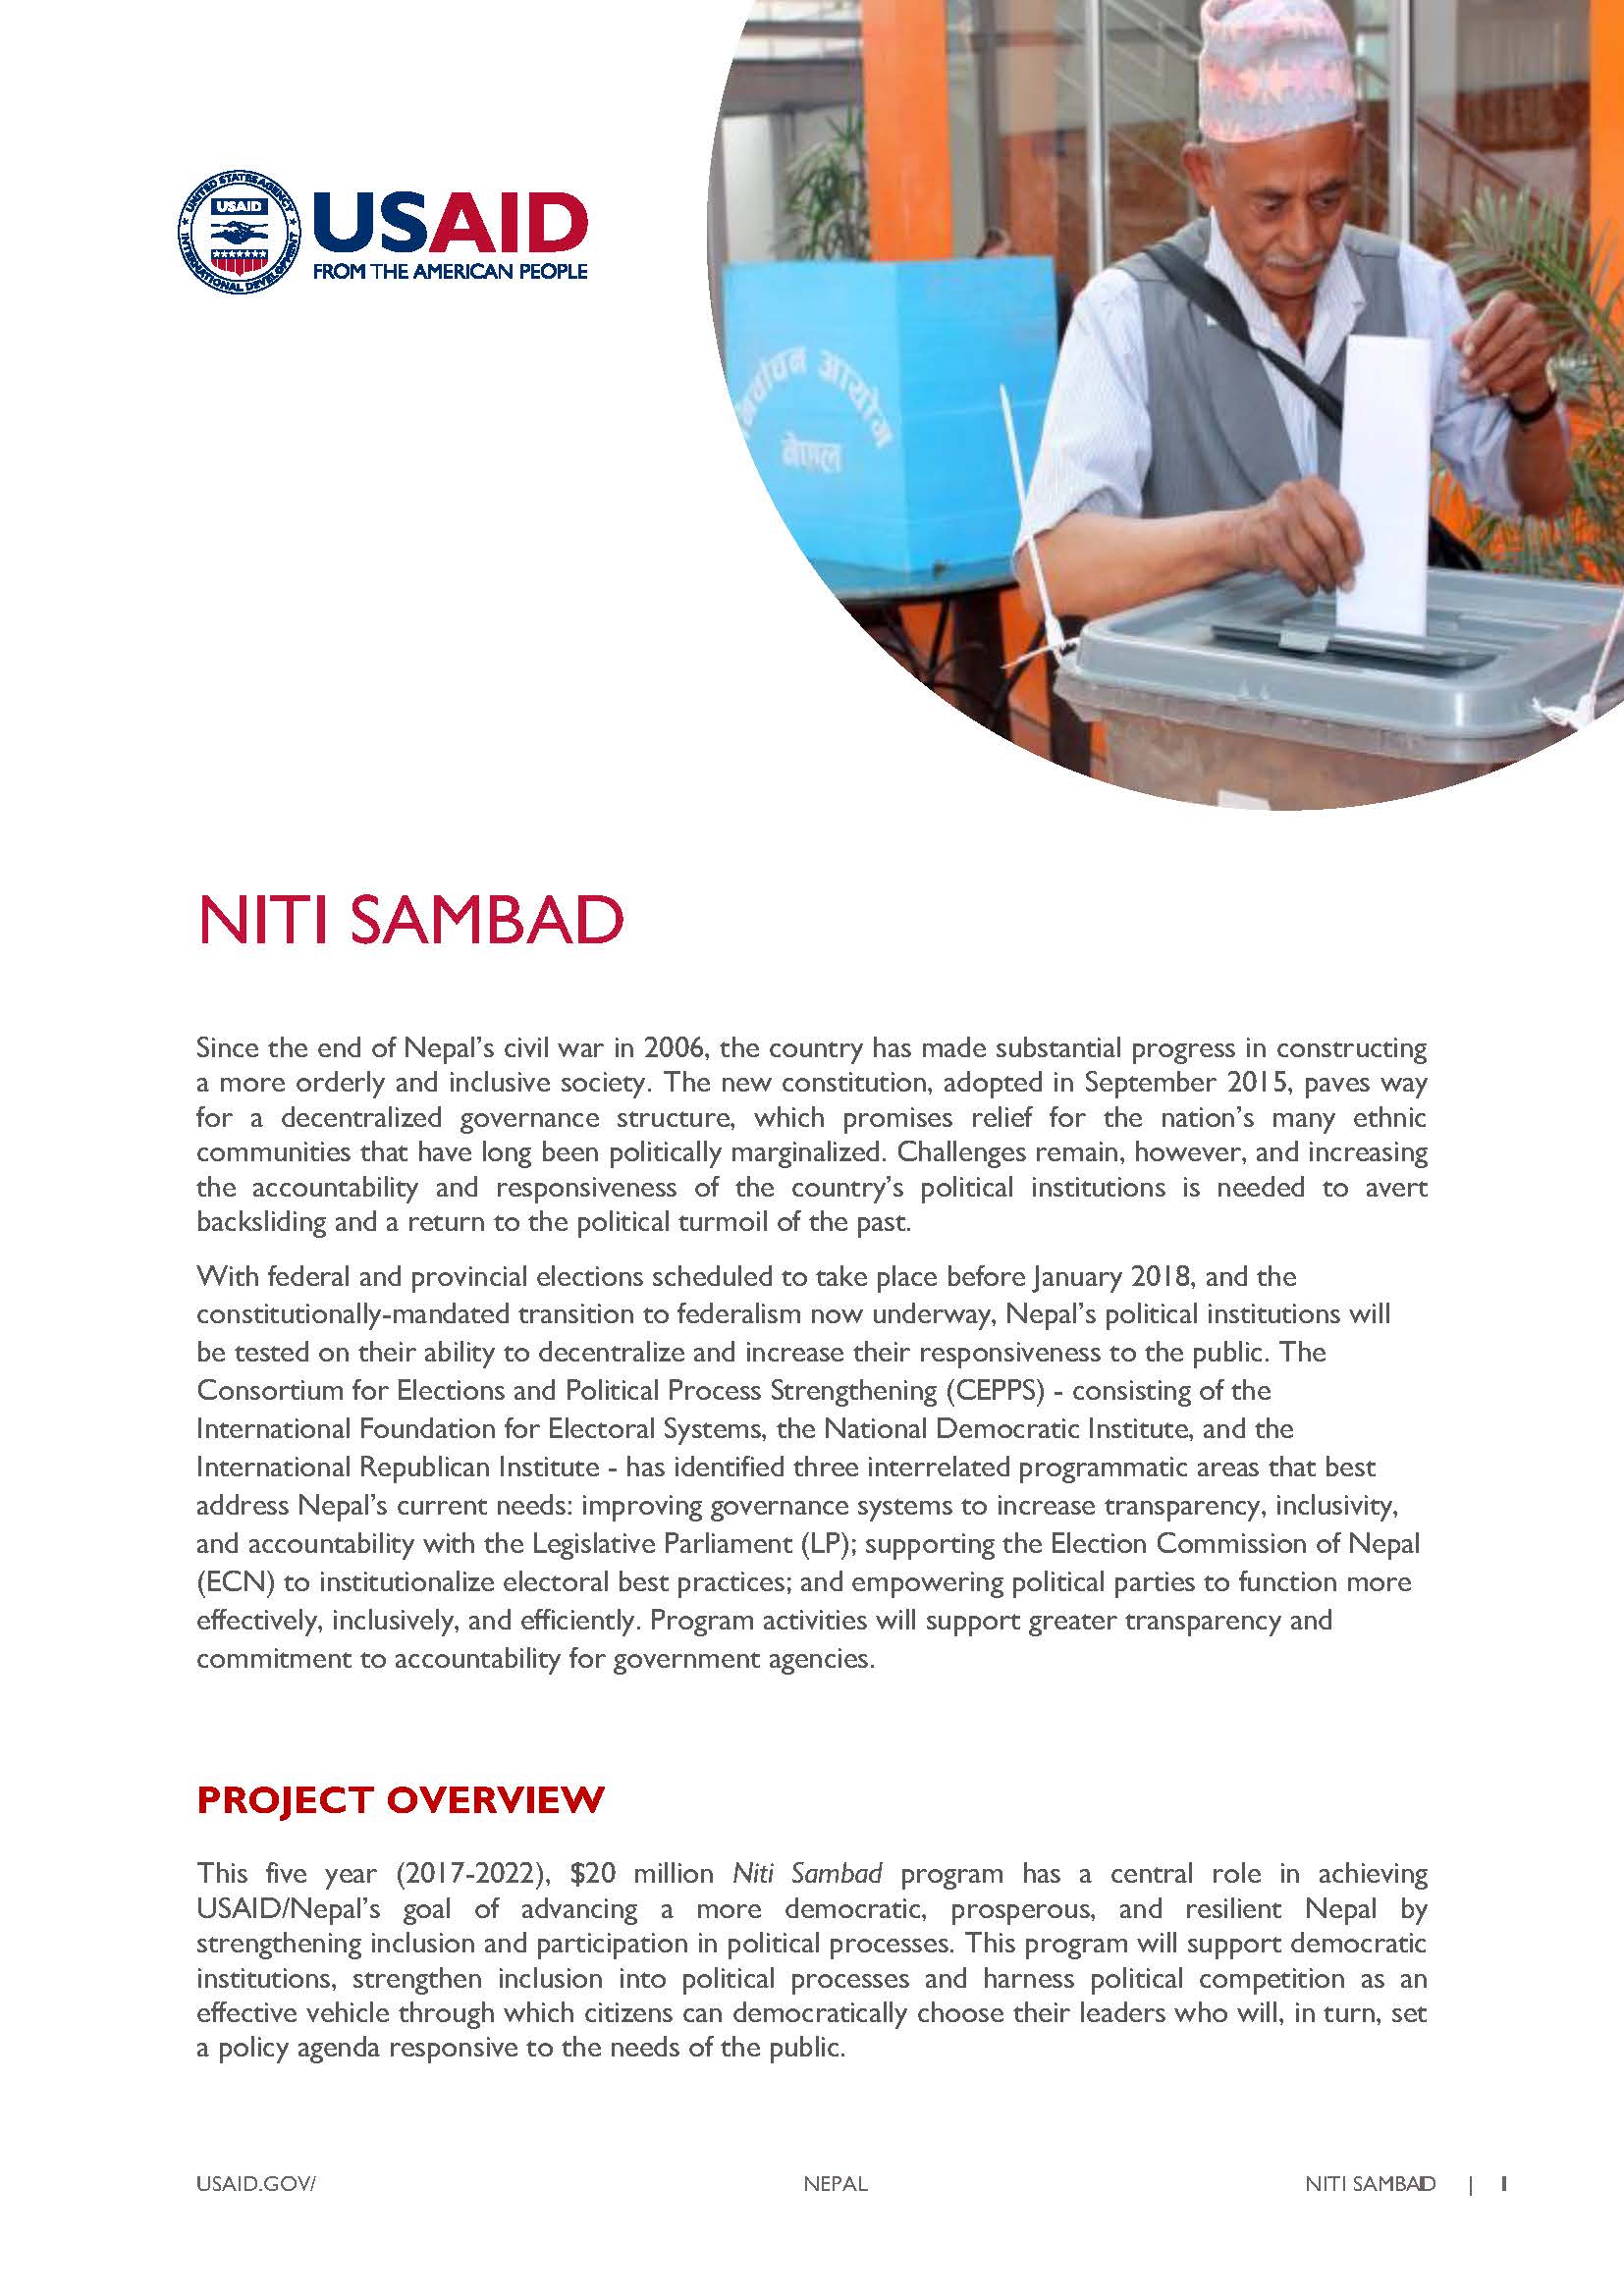 Fact Sheet: NITI SAMBAD